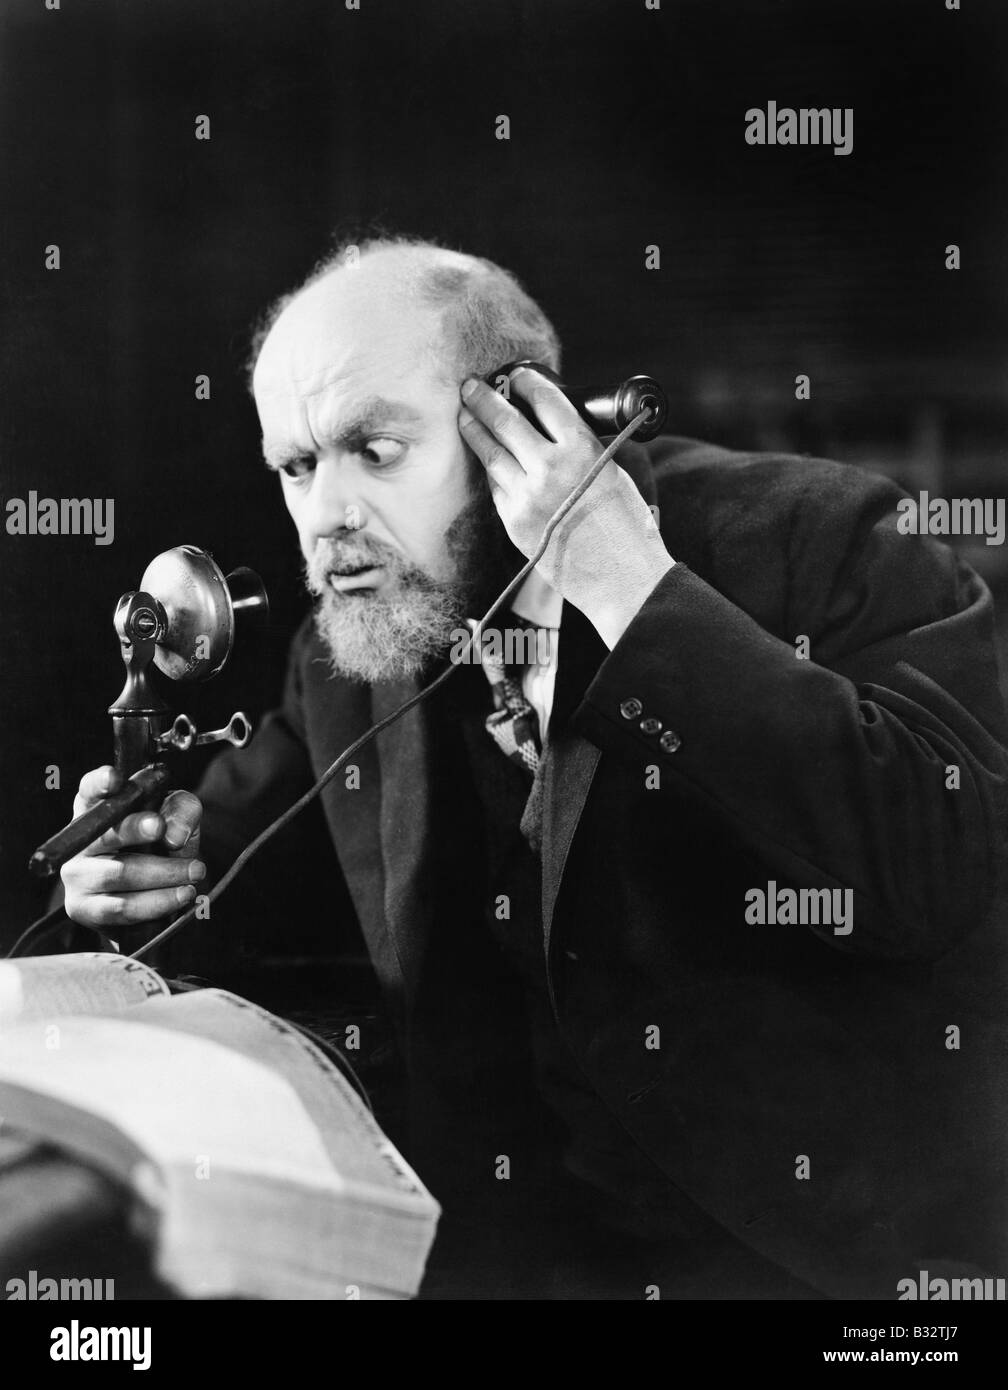 Man talking on the telephone looking intense Stock Photo